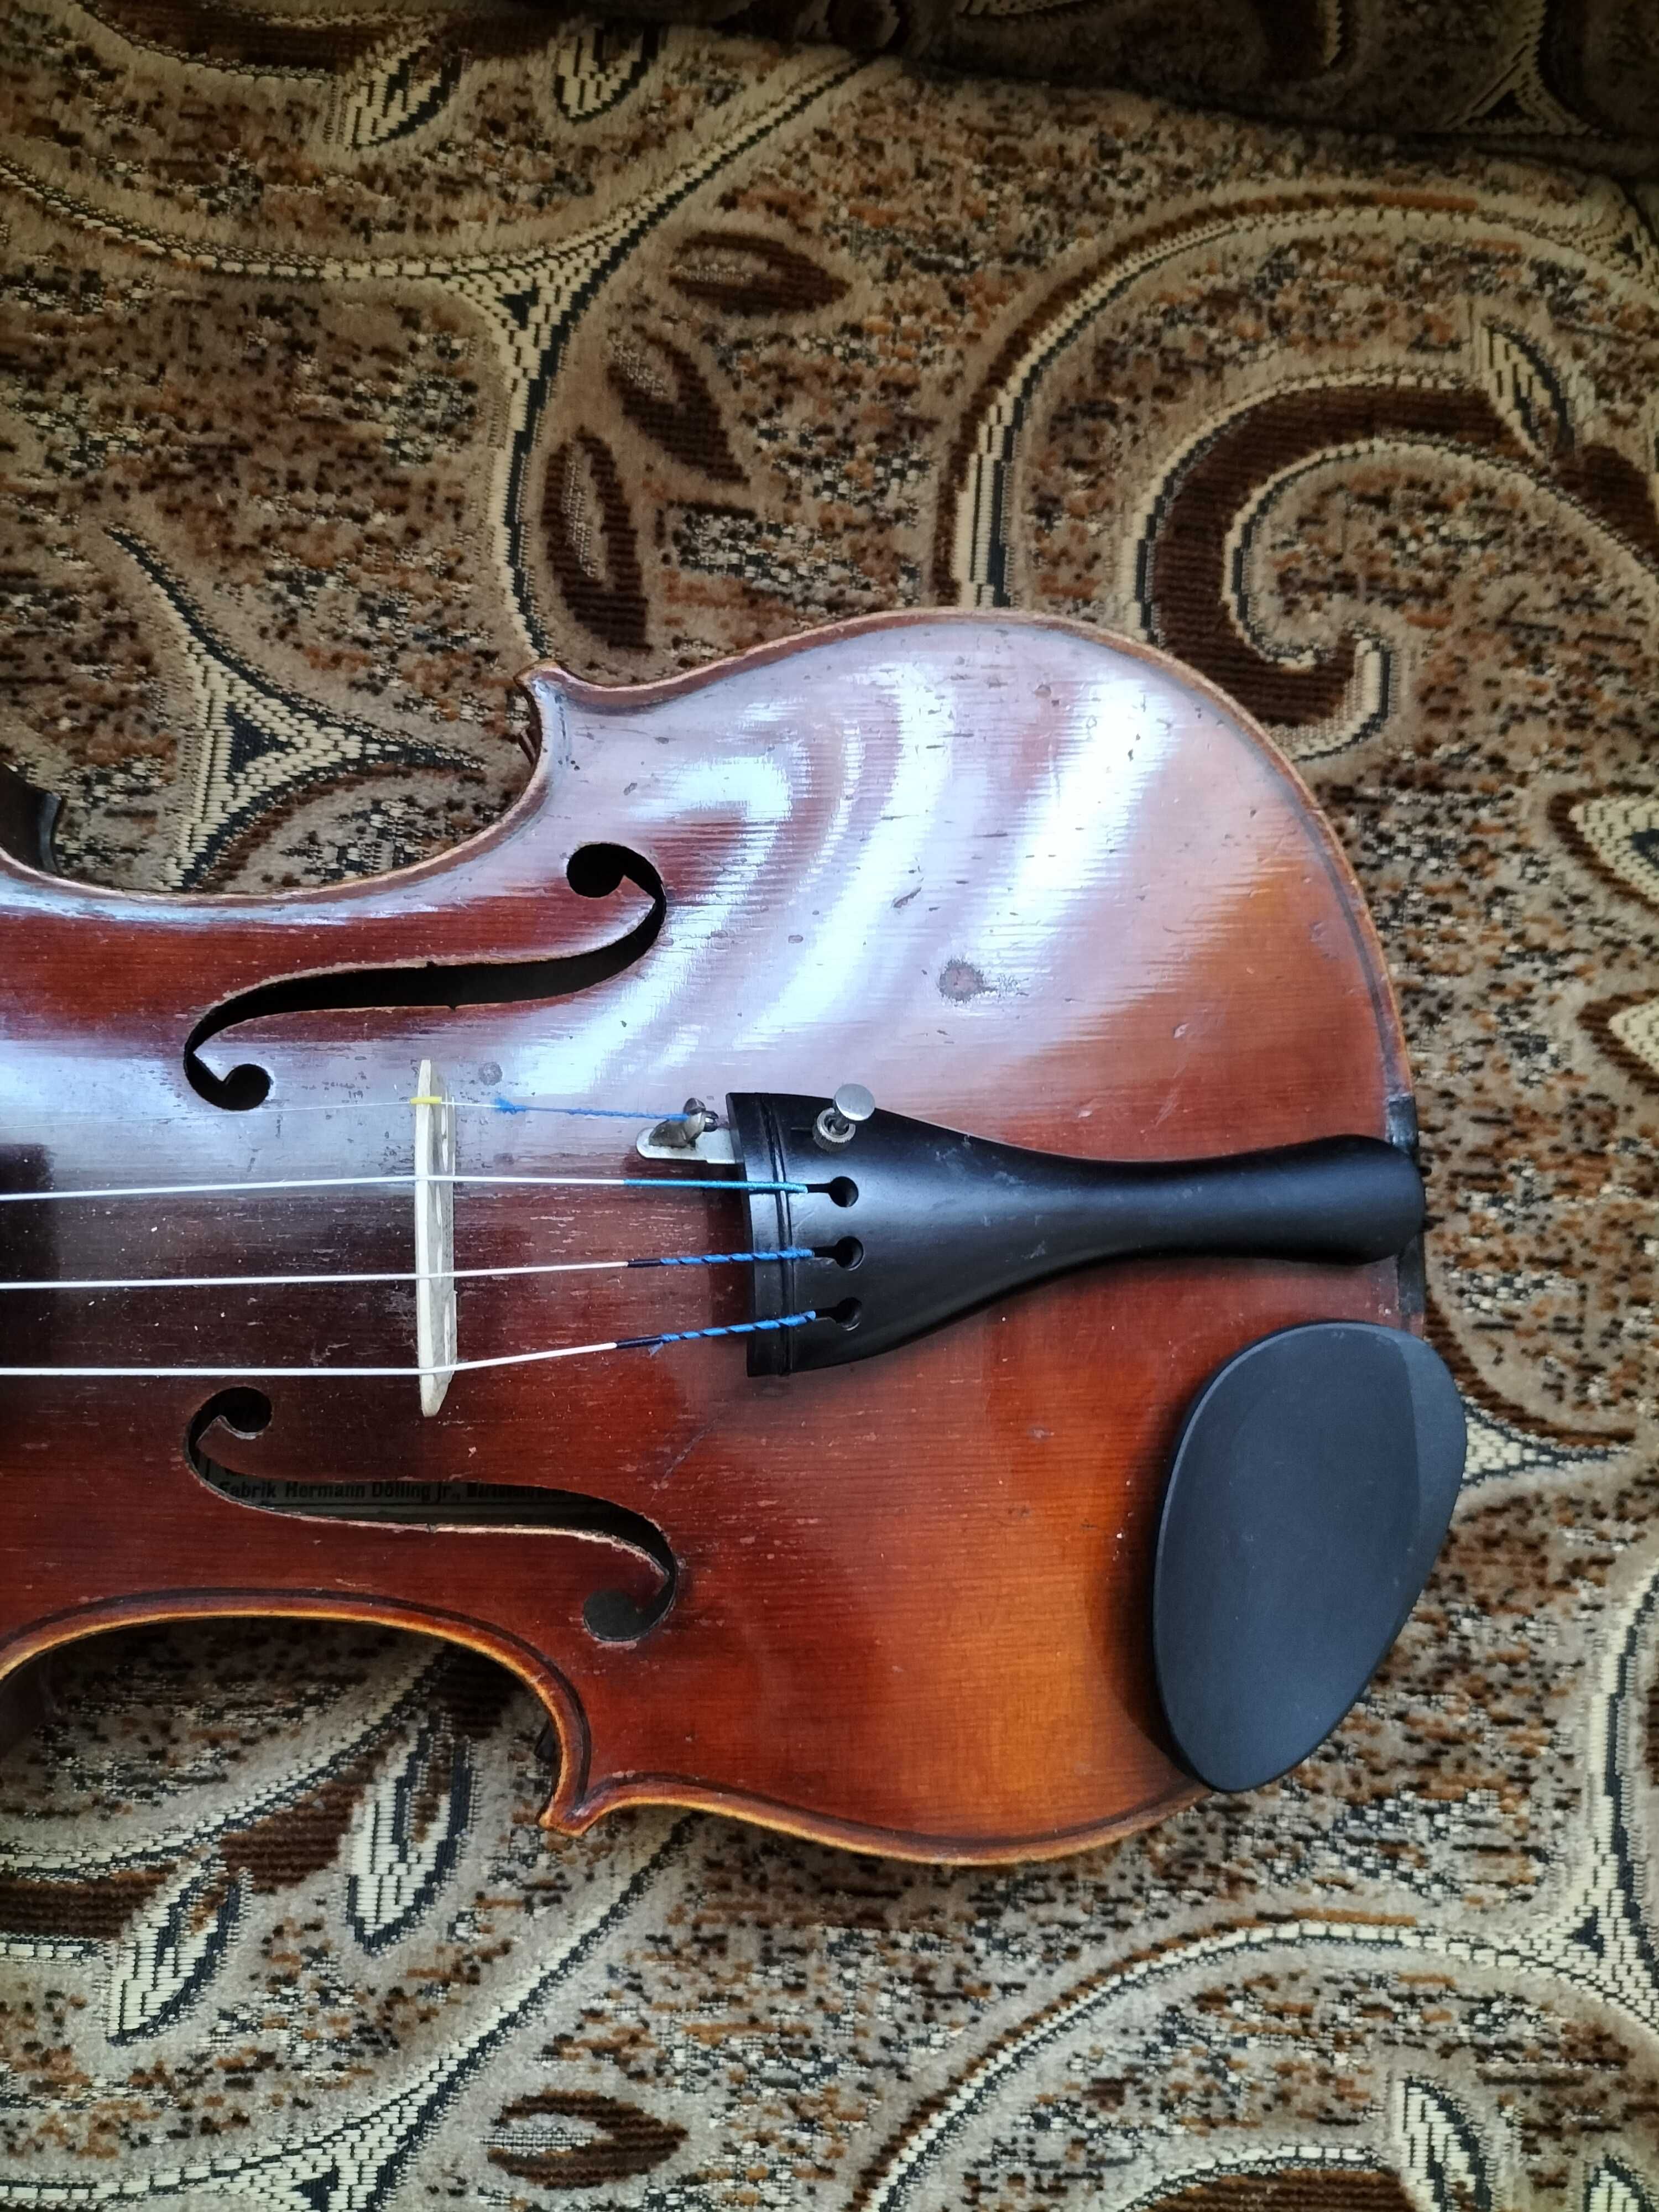 Skrzypce 4/4 Alessandro Gagliano Alumnus Stradivarius